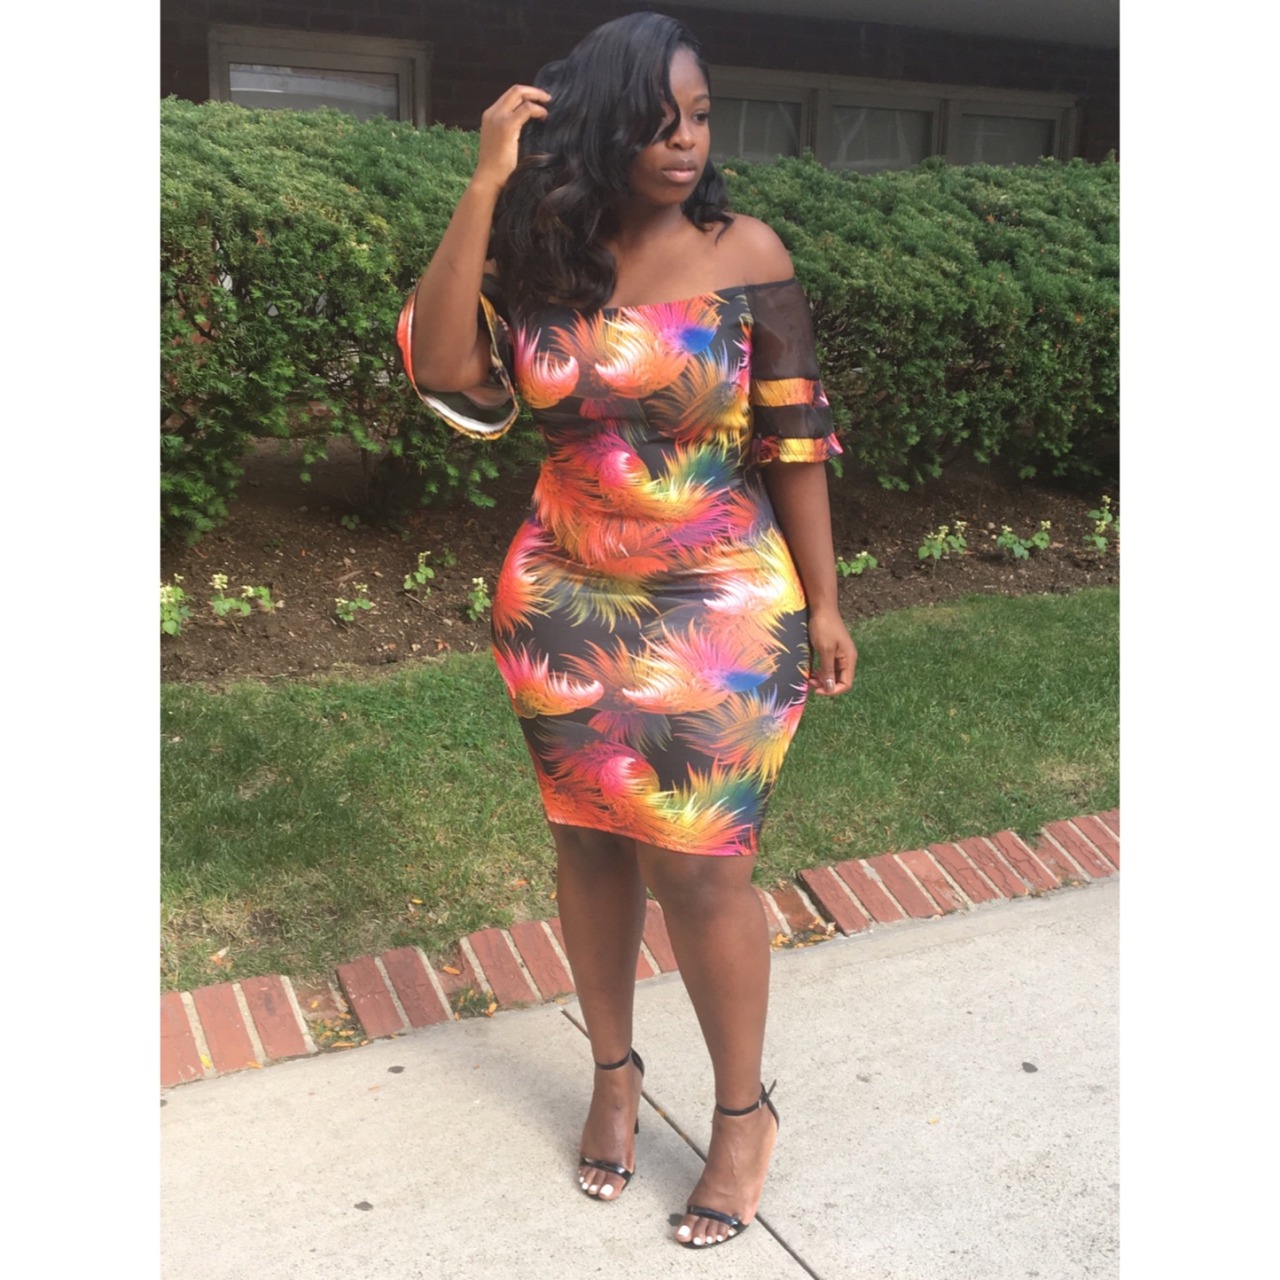 Big Beautiful Black Girls — IG: @sunasia, 25, New York Dress: @poshtiqe